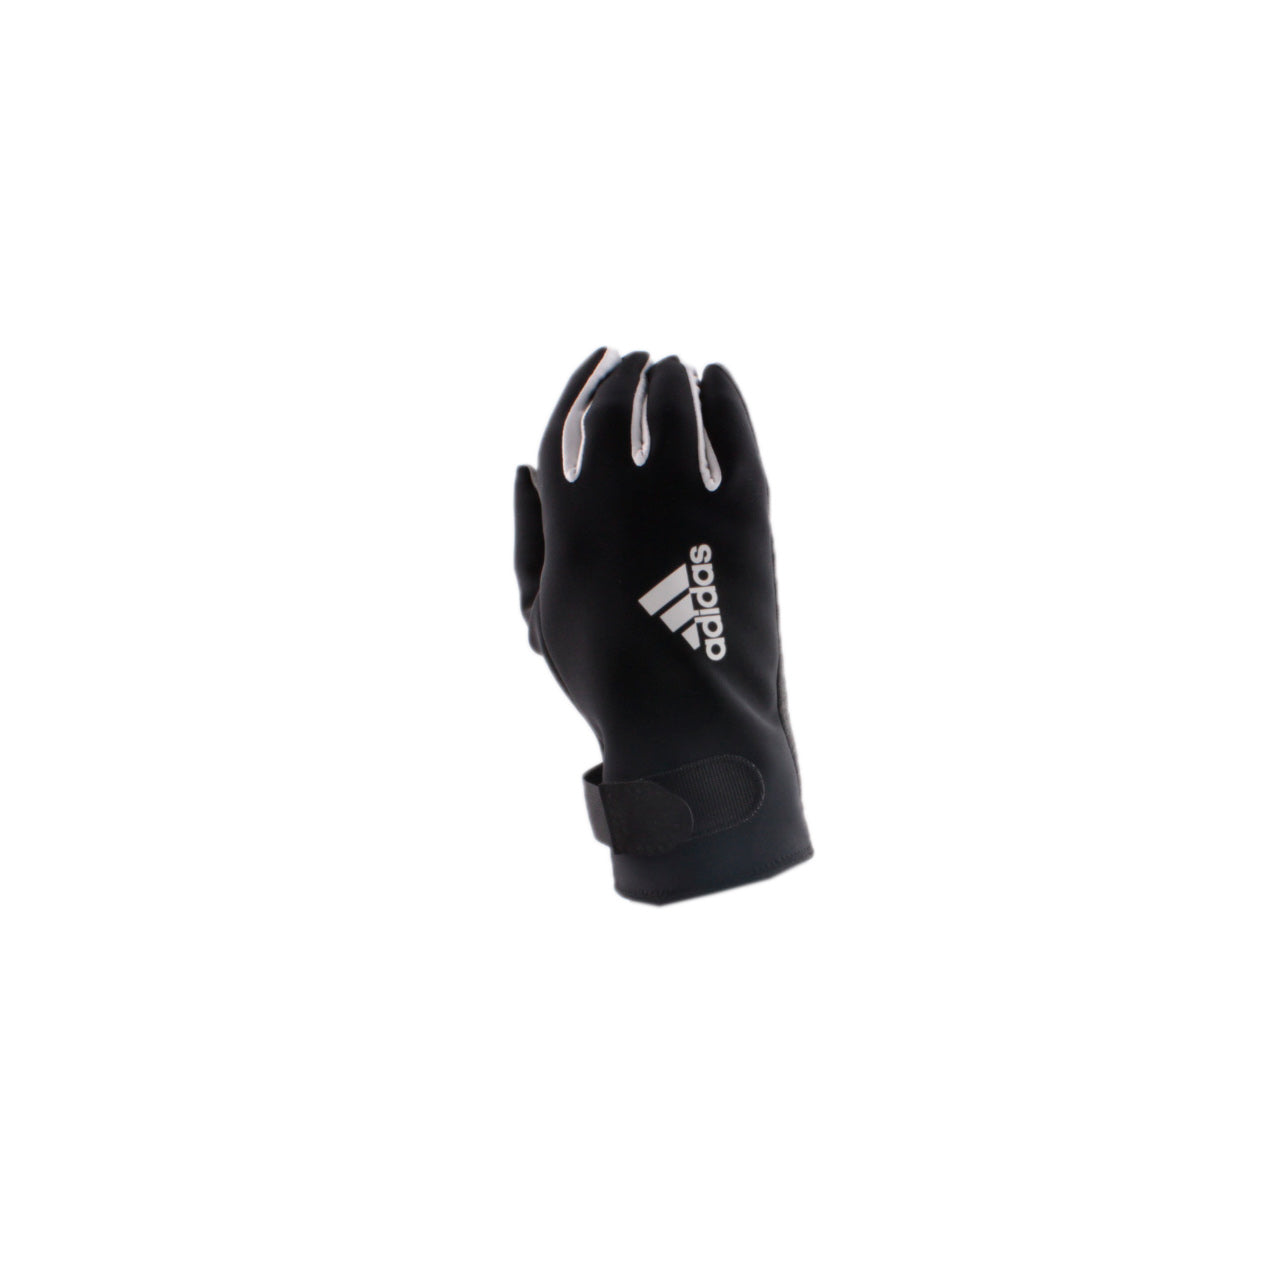 Adidas Cross V13 Handschuhe Glove X-Country Glove Biathlon Alkantara M65420 5,5